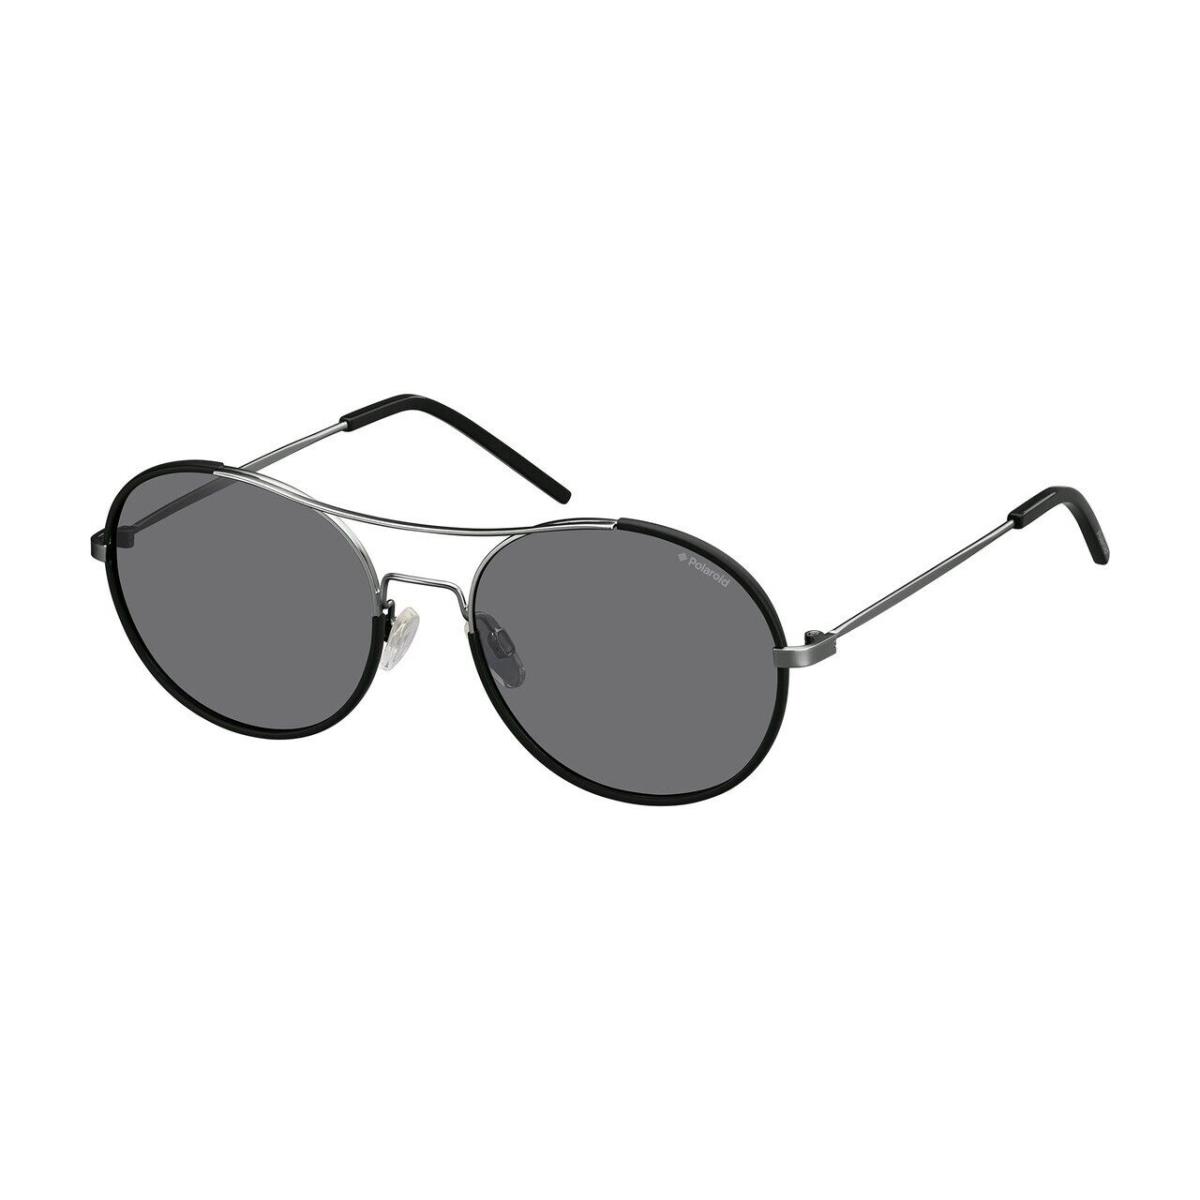 Unisex Sunglasses Polaroid Pld 1021 S KJ1 Y2 Polarized - Size 55